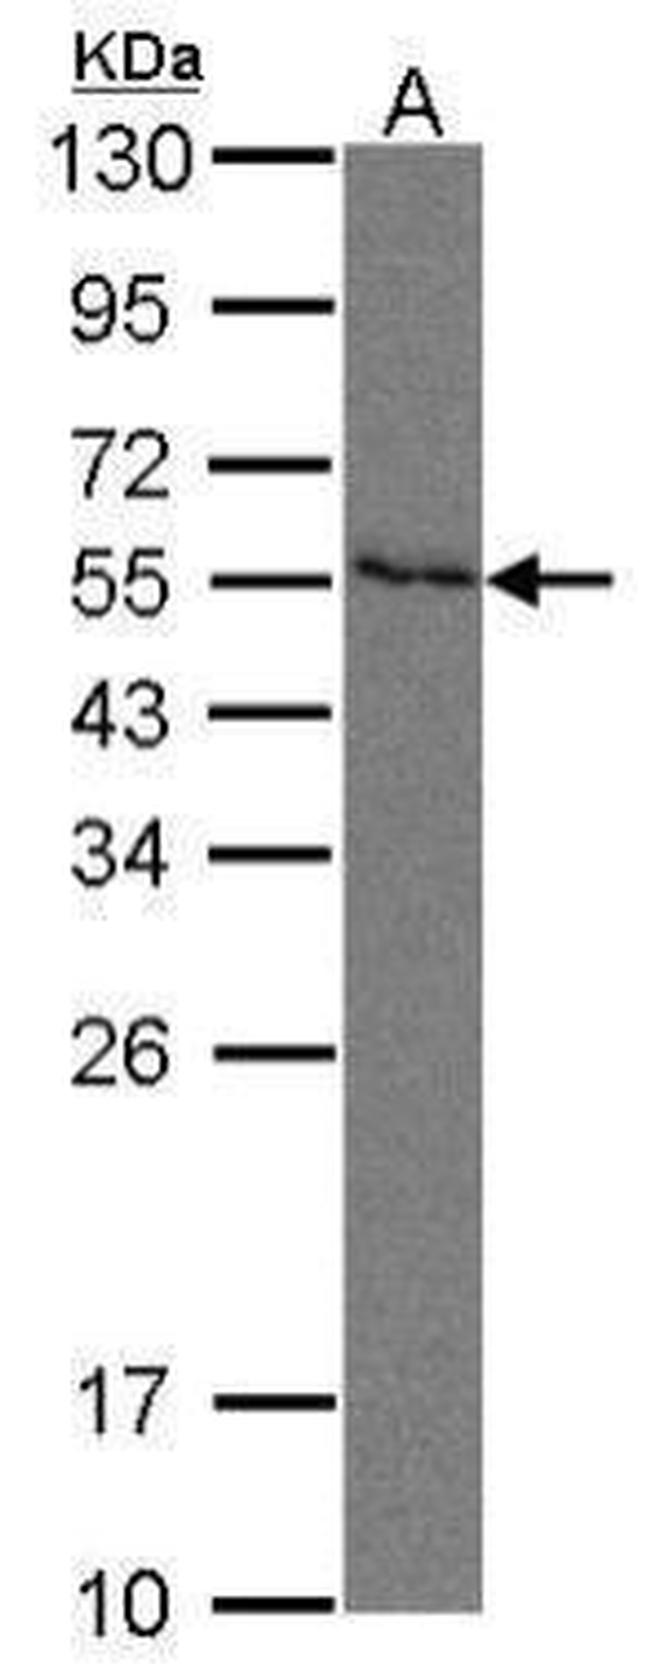 Nectin 2 Antibody in Western Blot (WB)